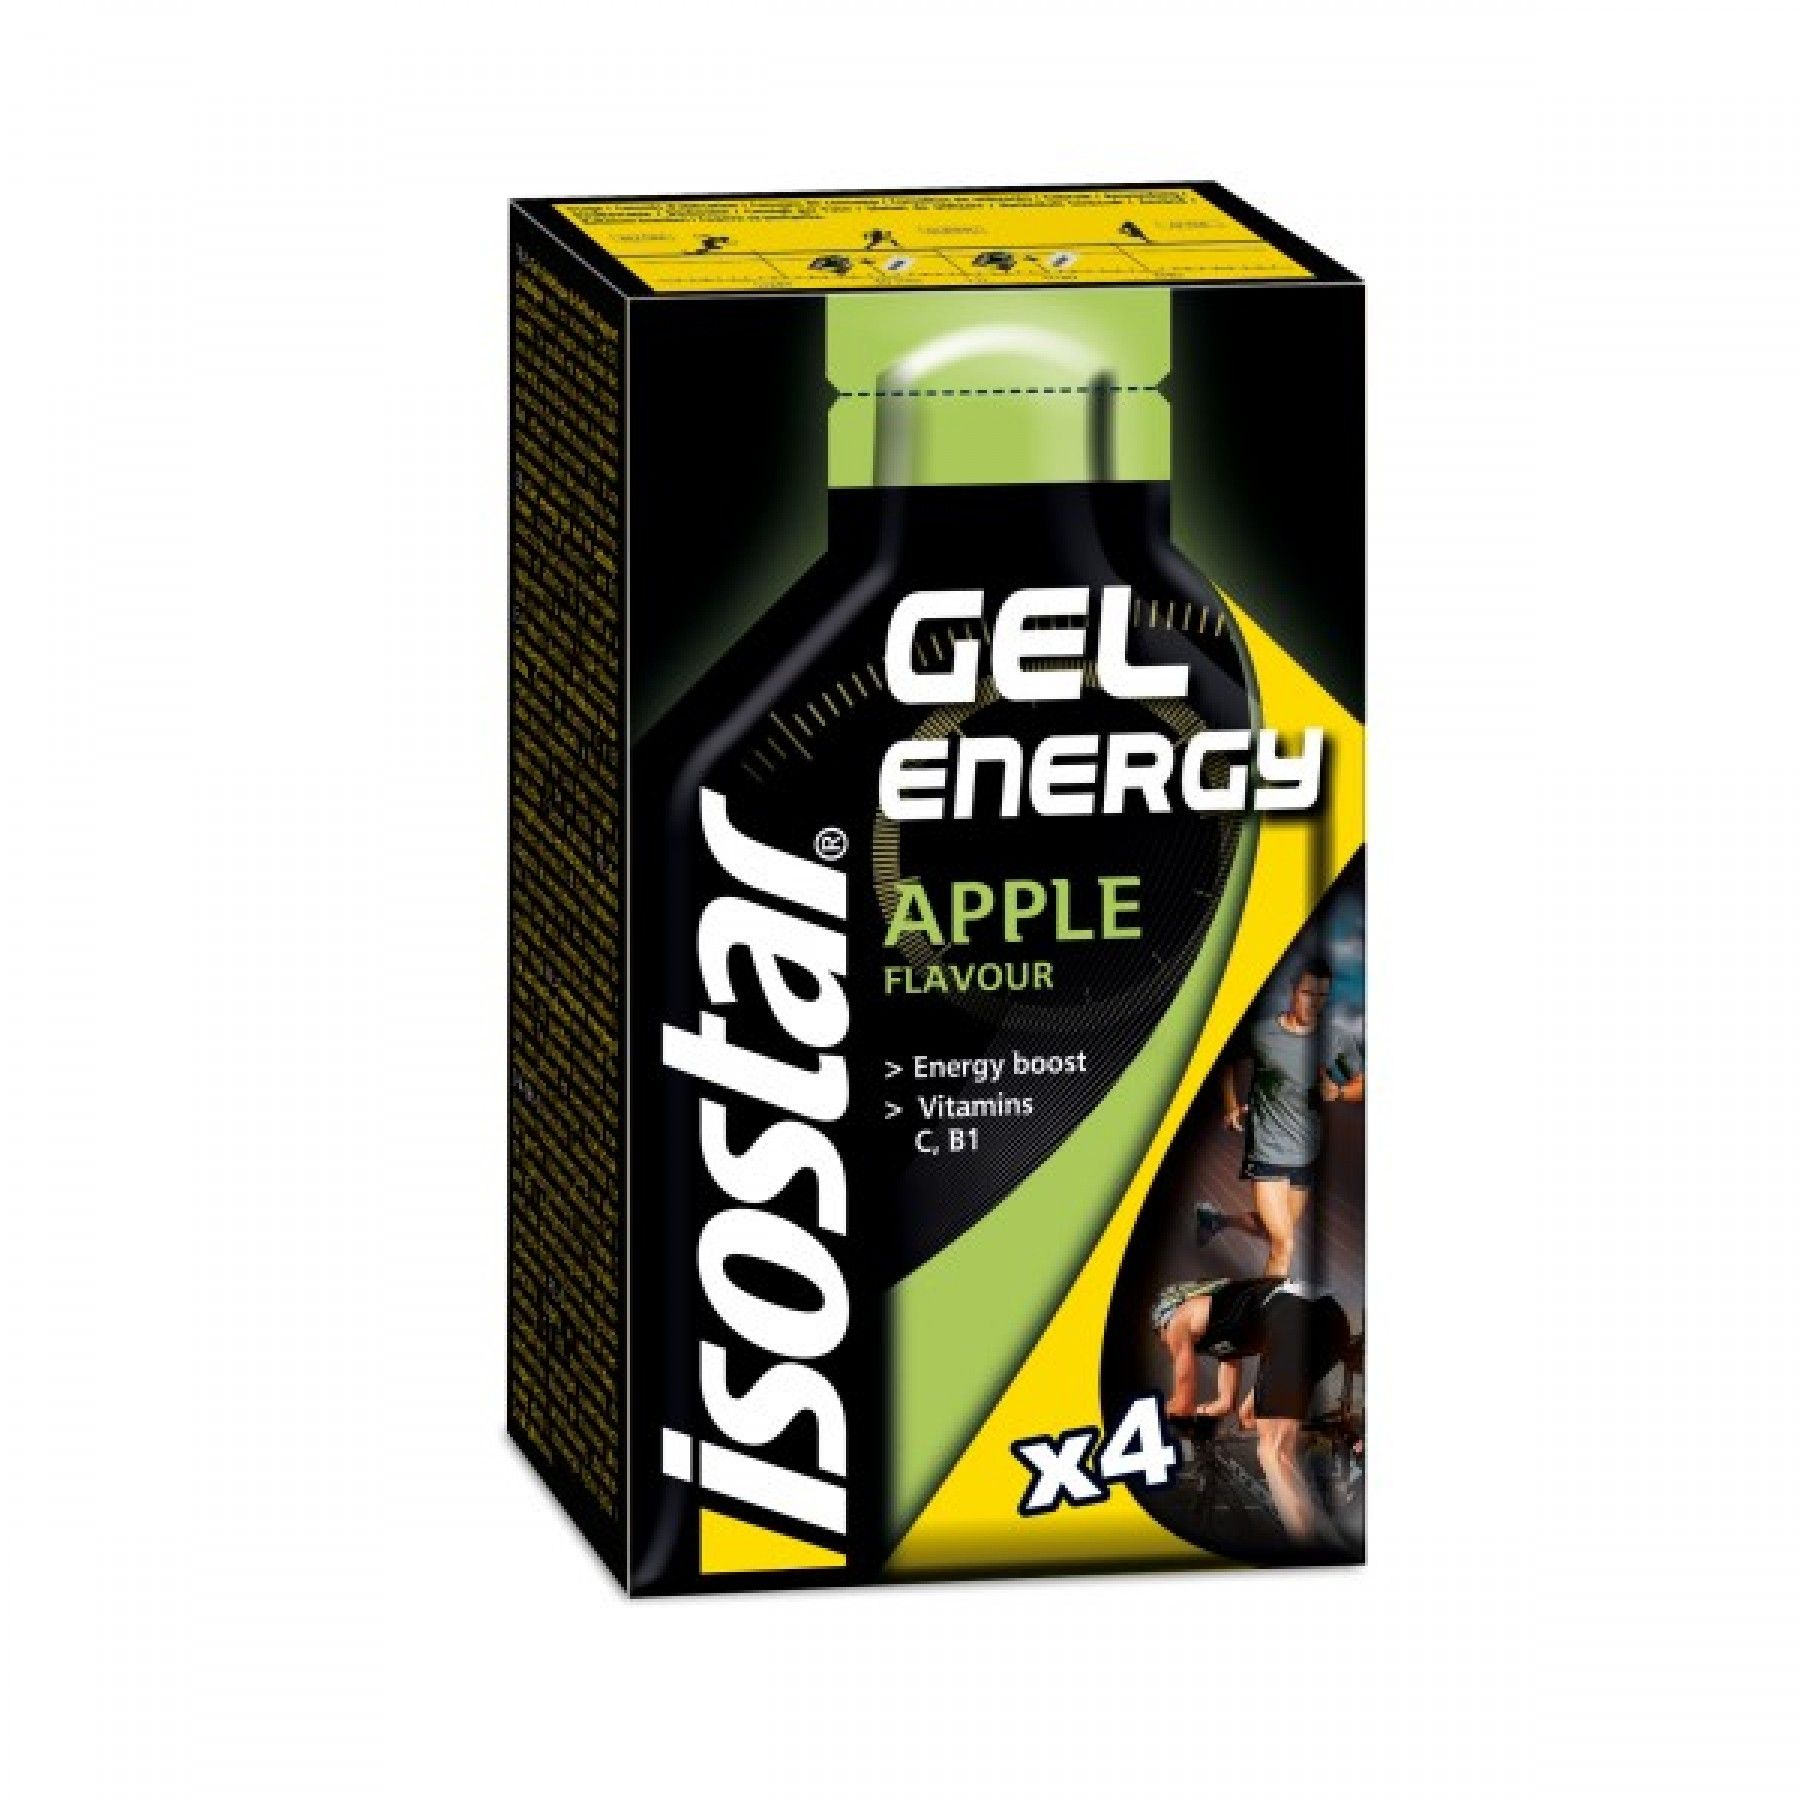 Gel energy apple flavour Isostar - 4 x 35 g